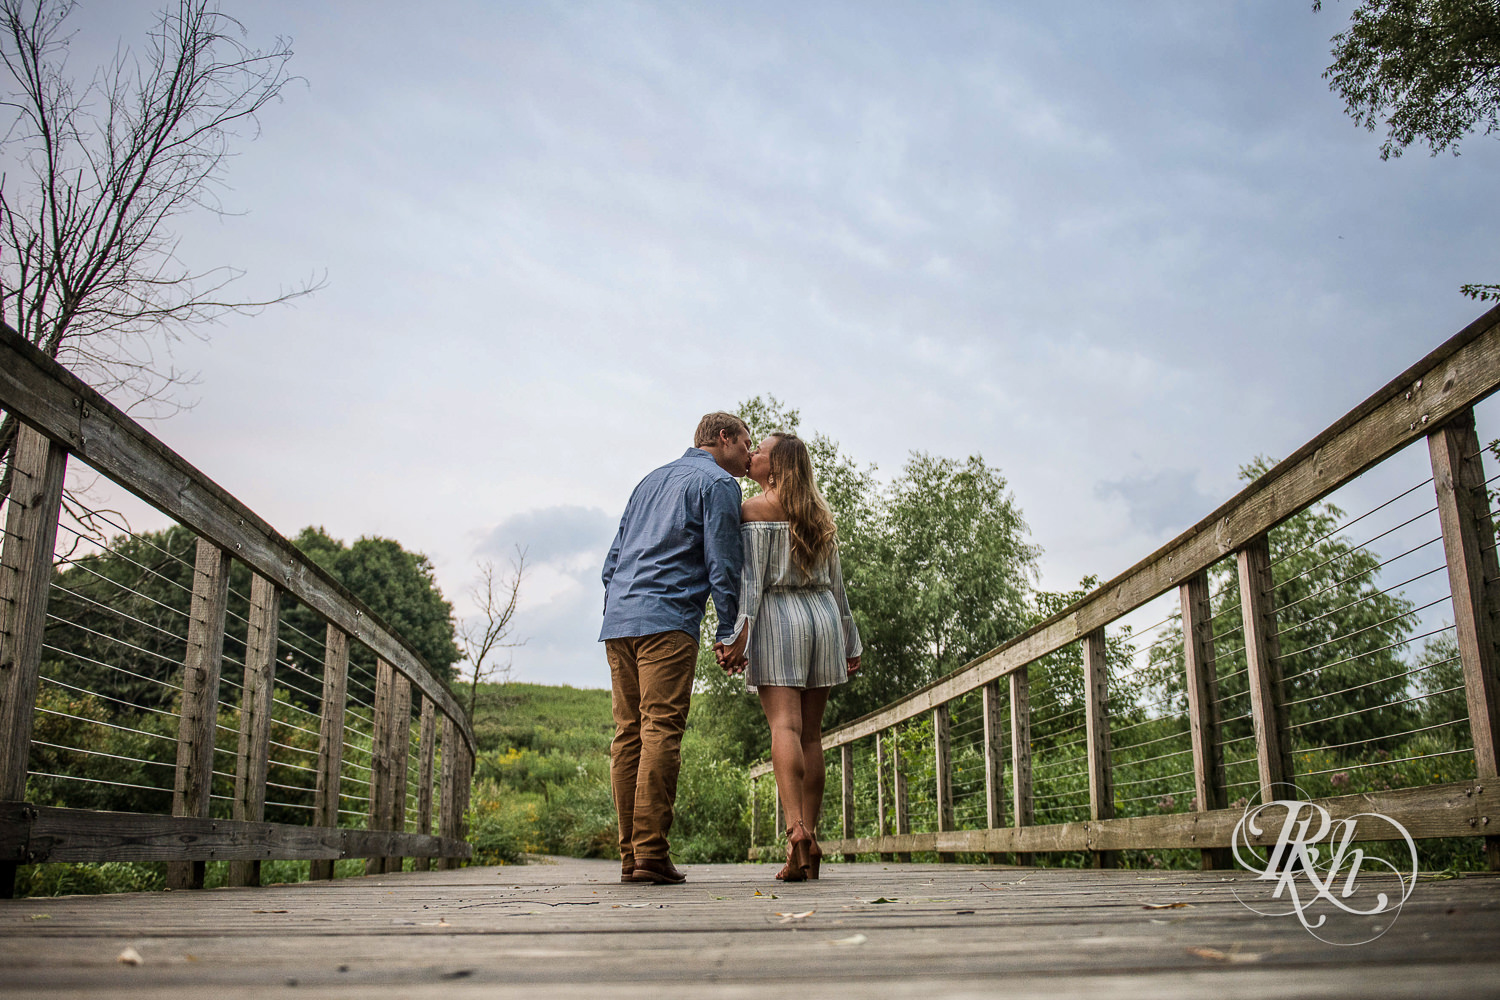 Man and woman kiss on bridge at sunrise in Lebanon Hills Regional Park in Eagan, Minnesota.